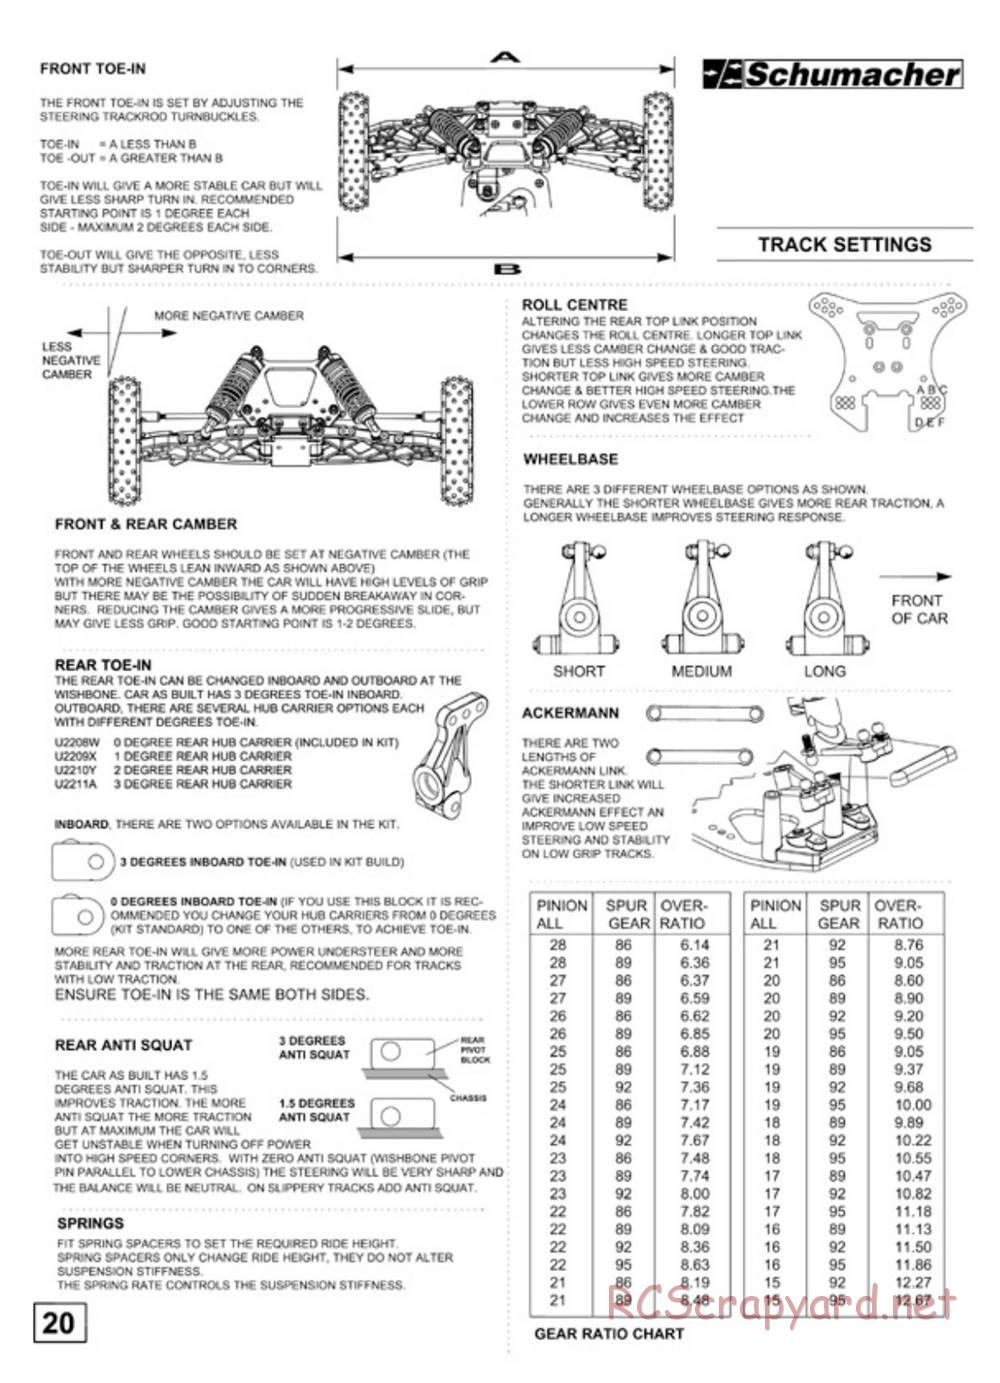 Schumacher - Fireblade Evo - Manual - Page 23